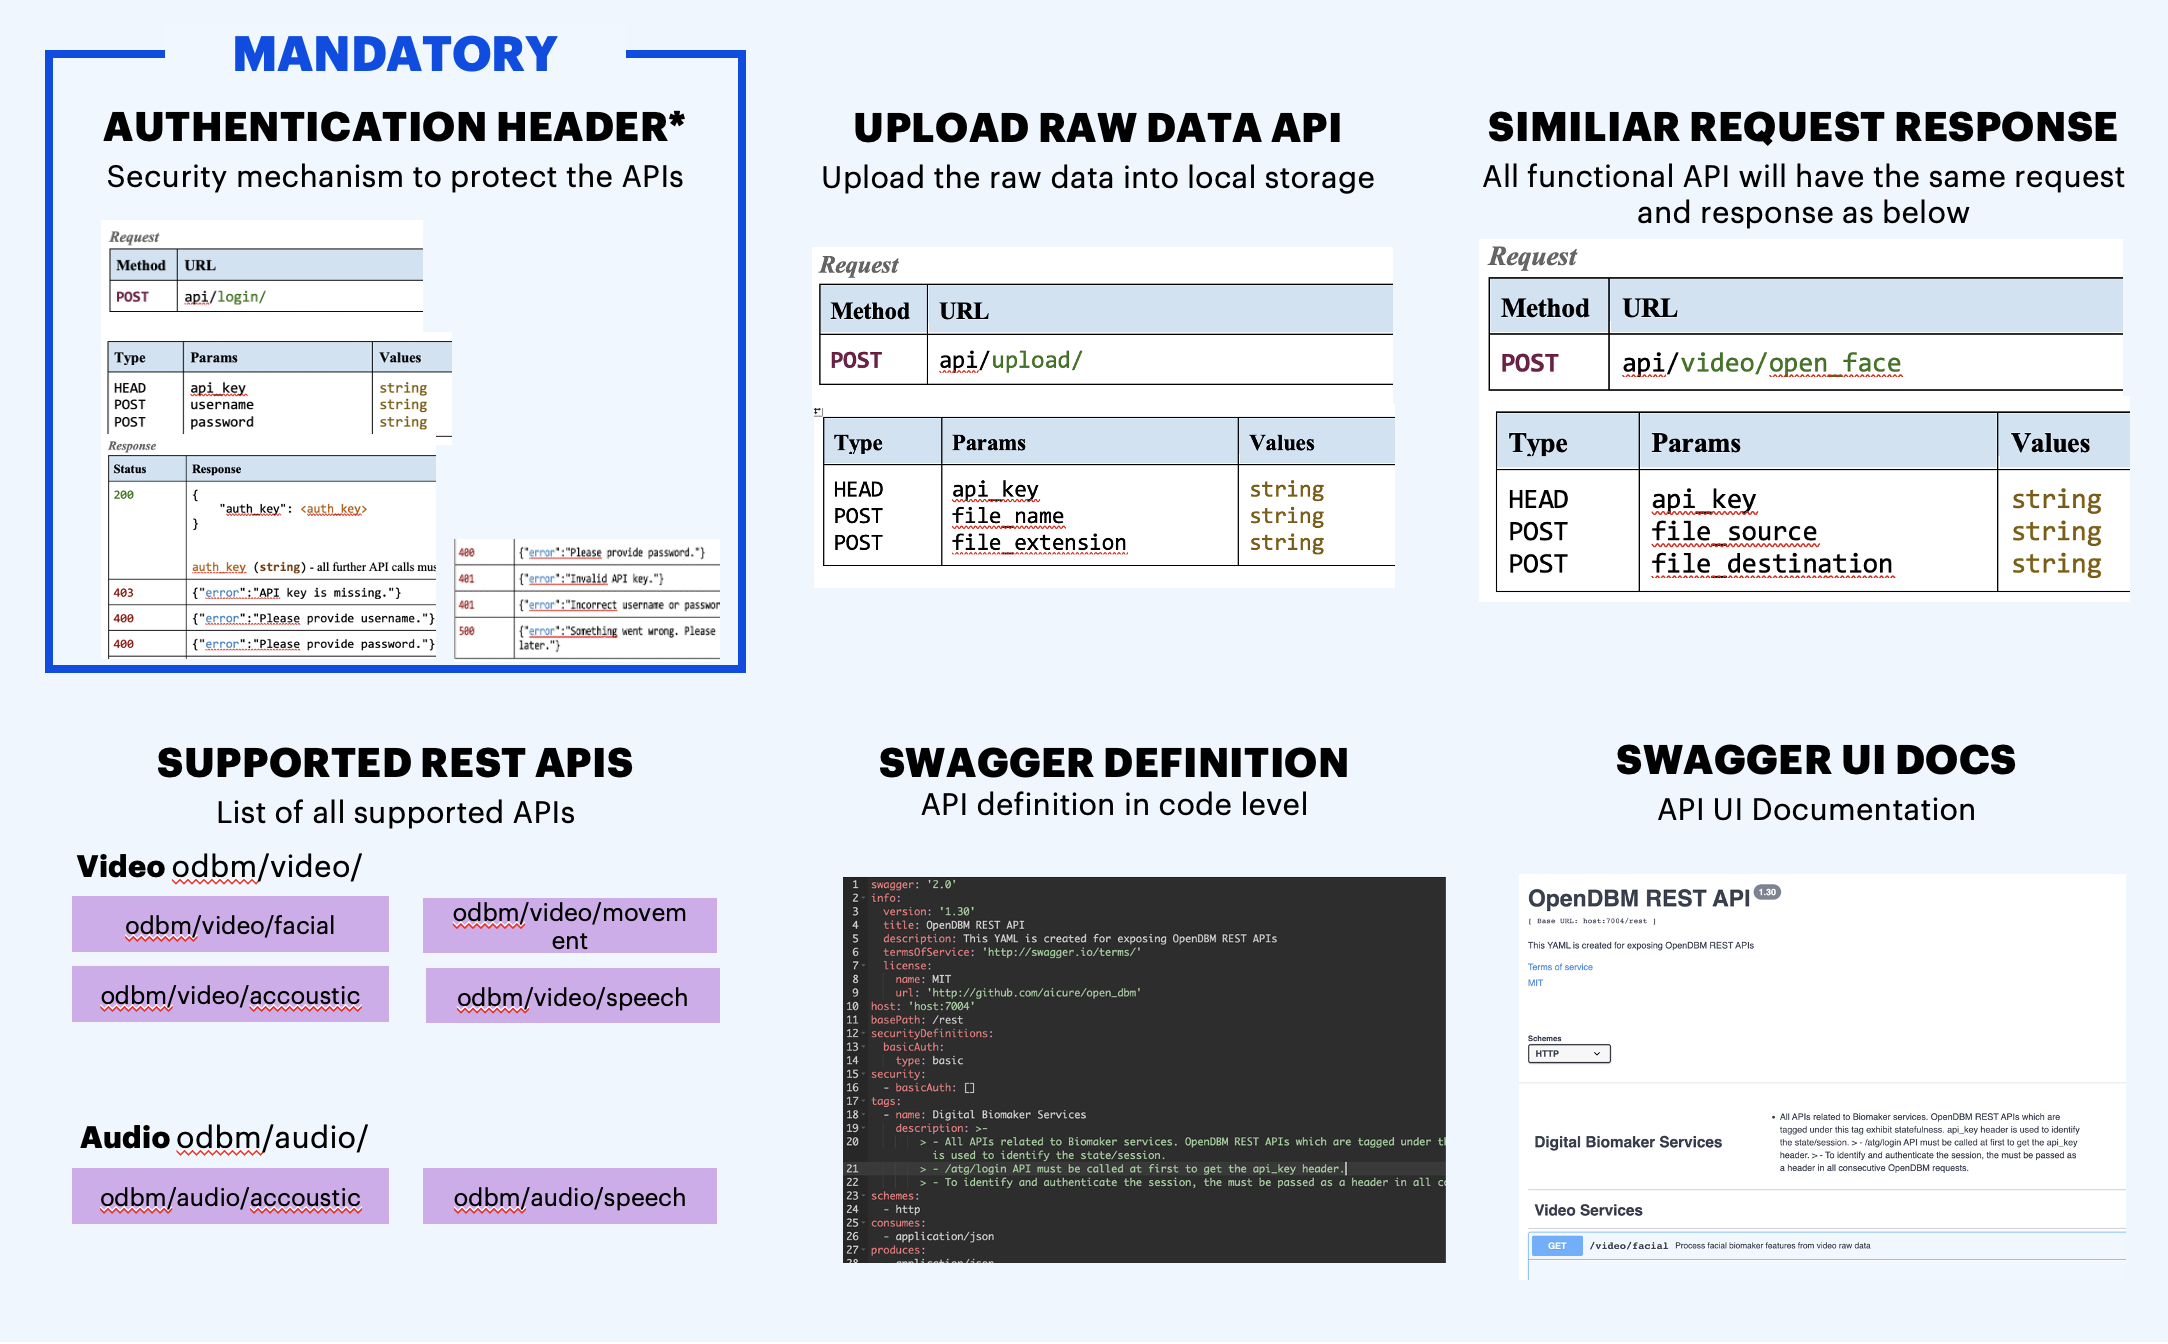 OpenDBM REST API Summary